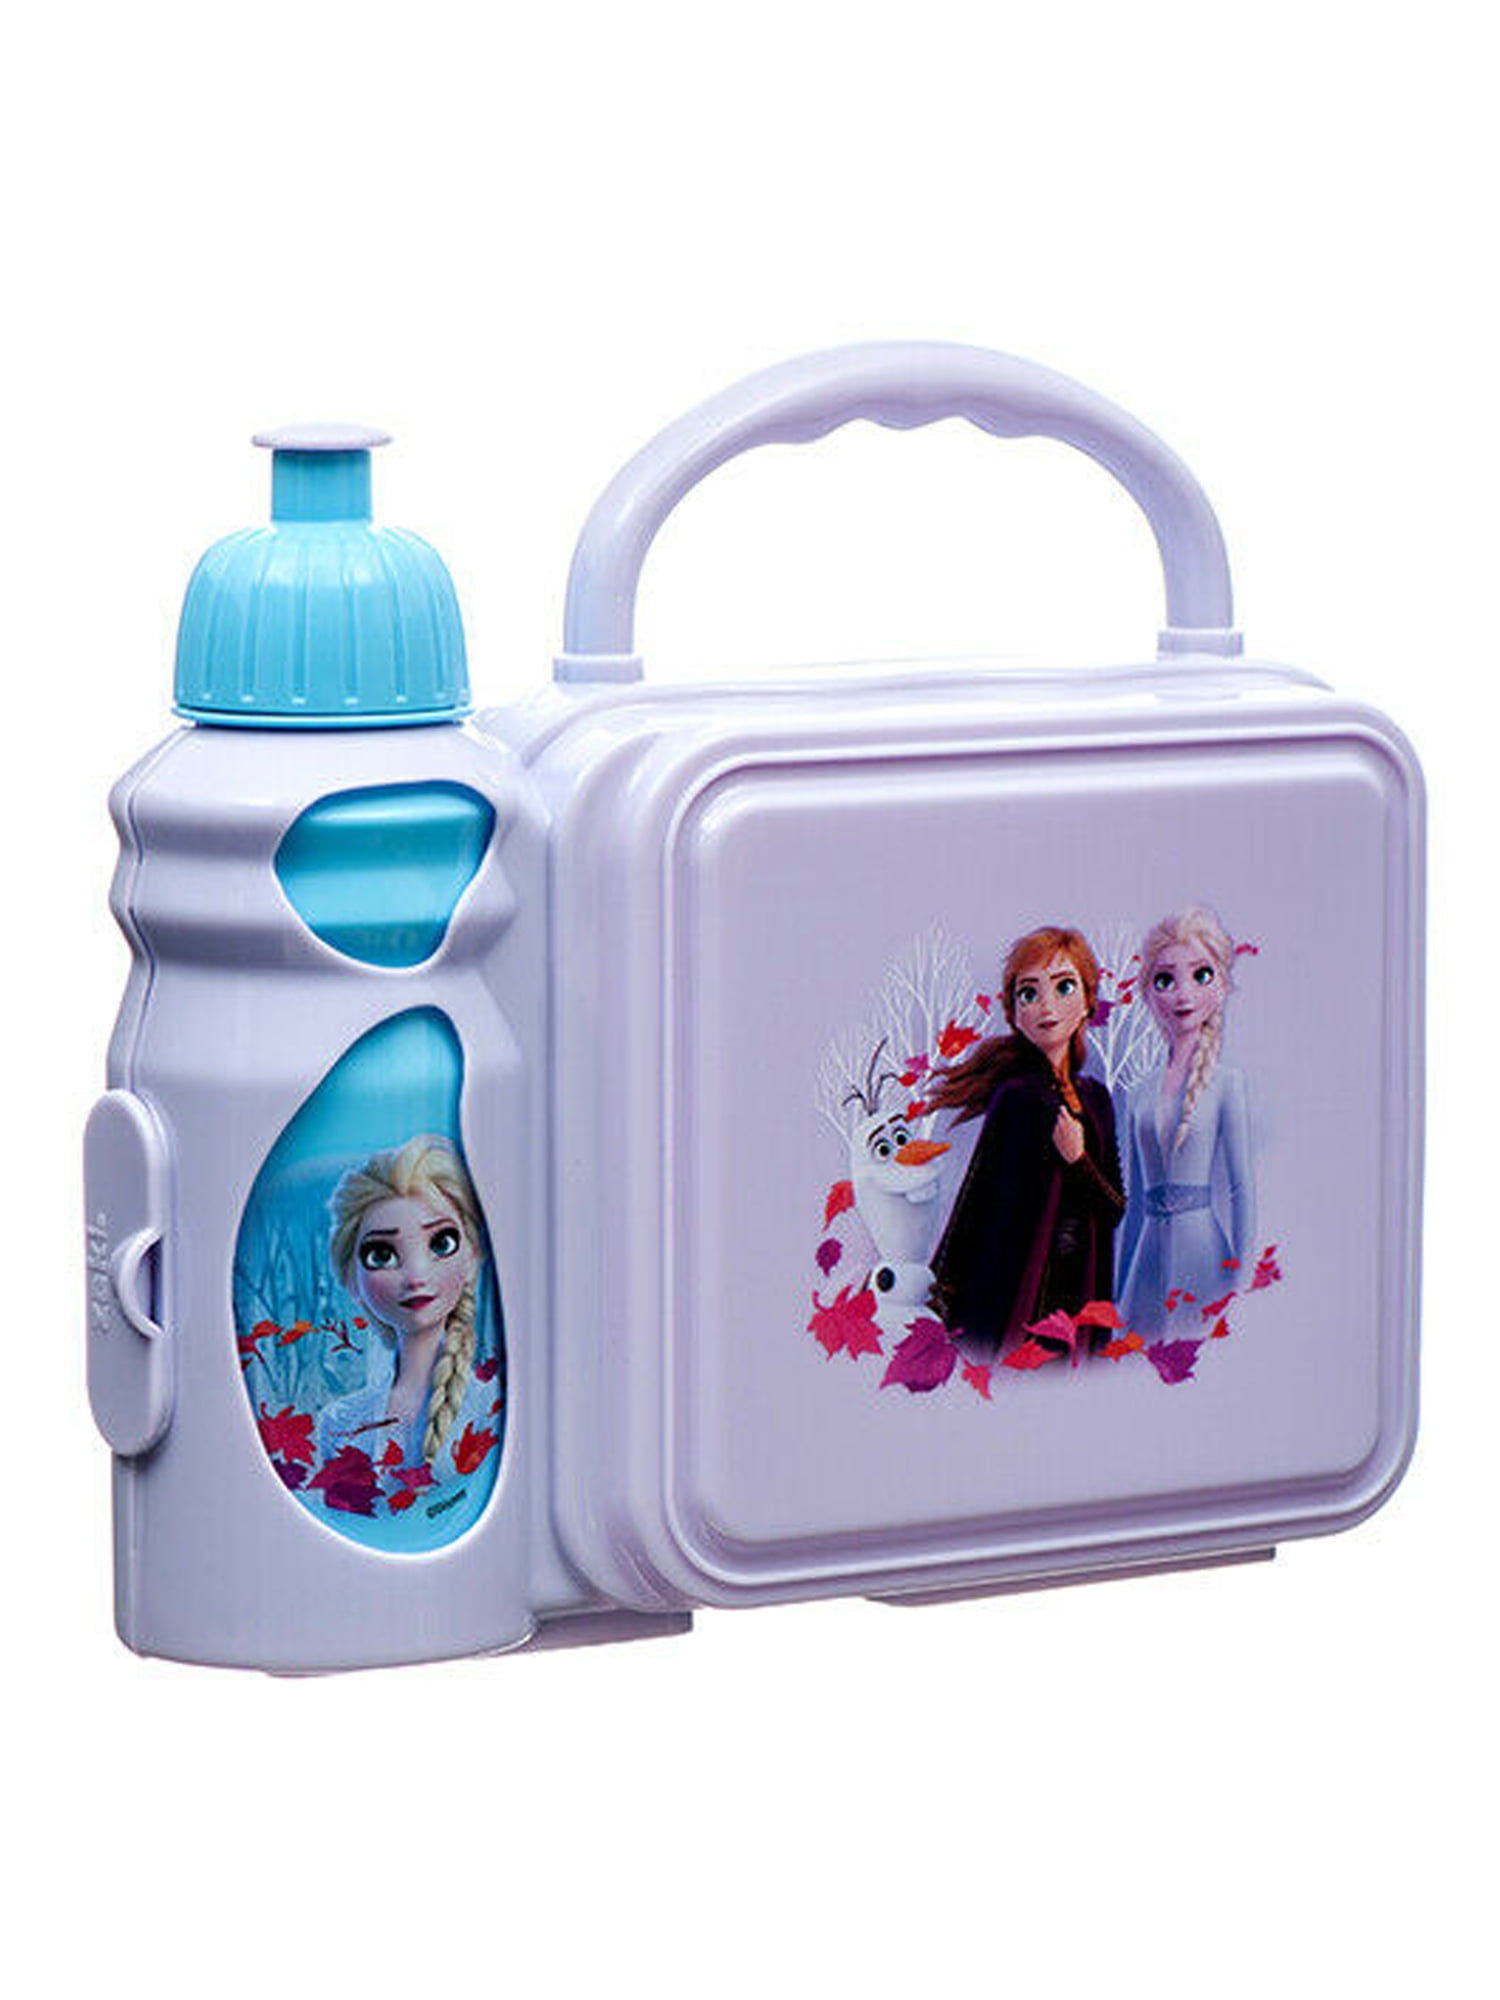 Walt Disney Studio Disney Frozen Lunch Bag Bundle ~ Frozen Lunch Box Set  Featuring Anna and Elsa wit…See more Walt Disney Studio Disney Frozen Lunch